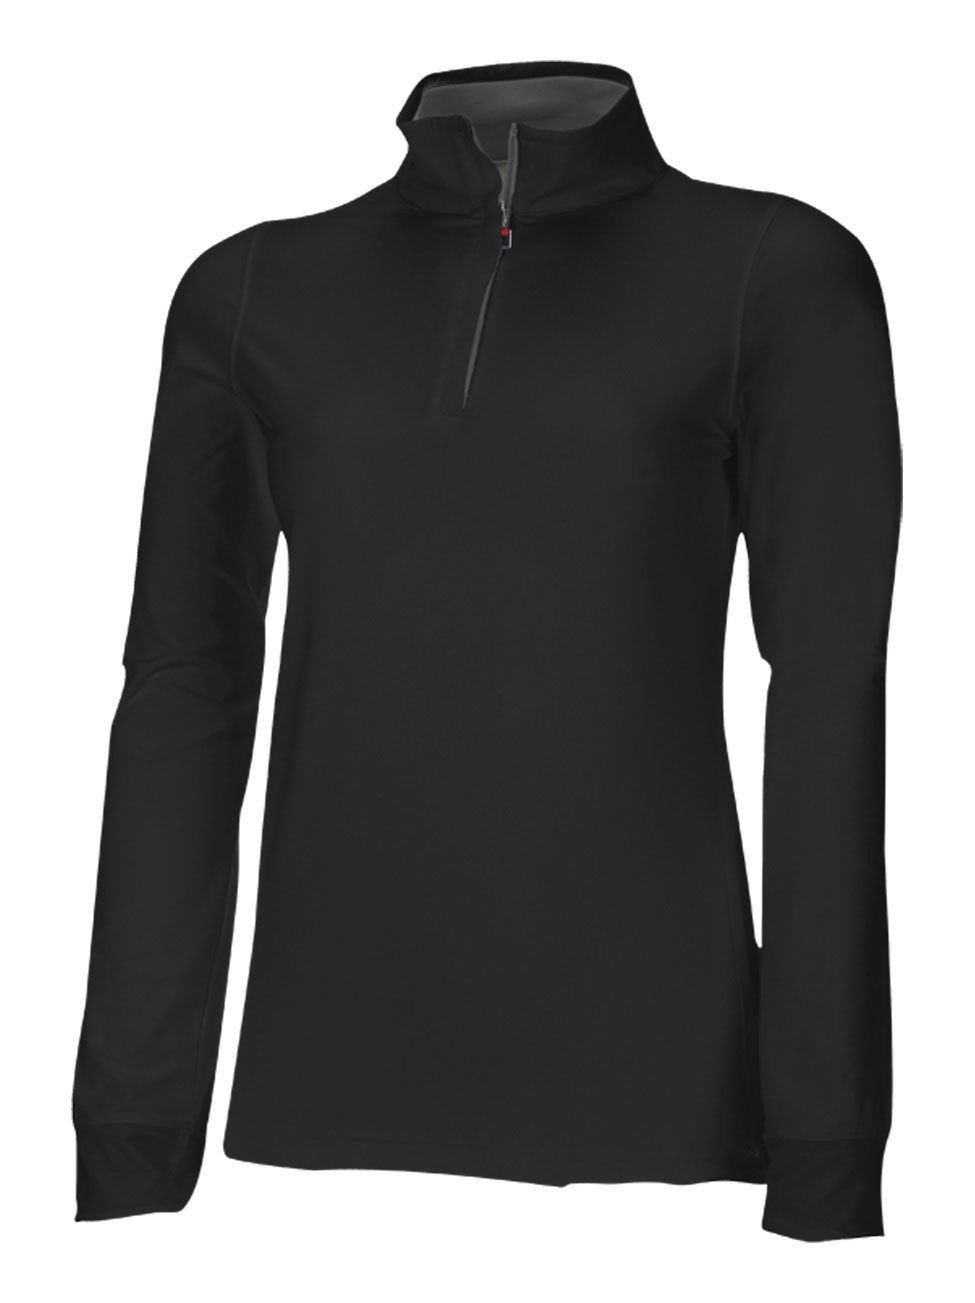 Fila Women's Reno Long Sleeve Sport Shirt #FA6702 Black